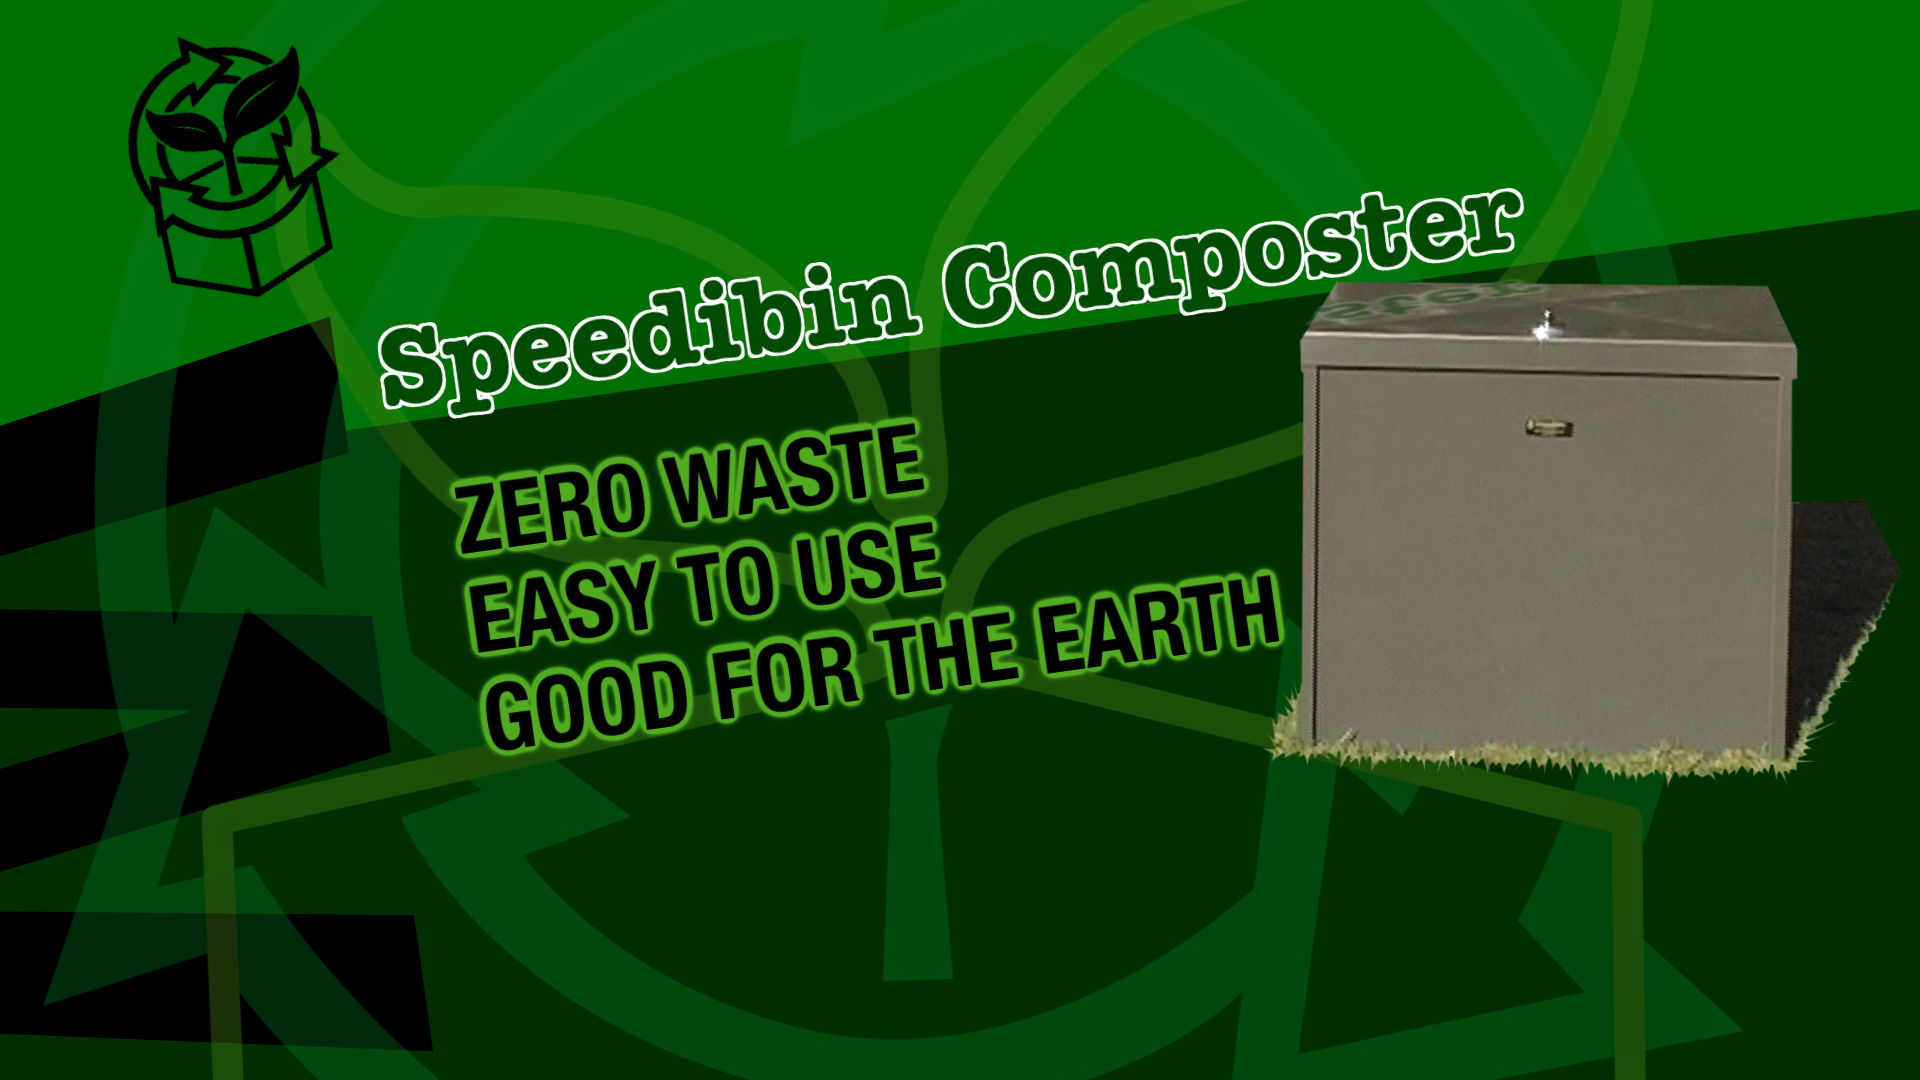 Speedibin Composter short ad